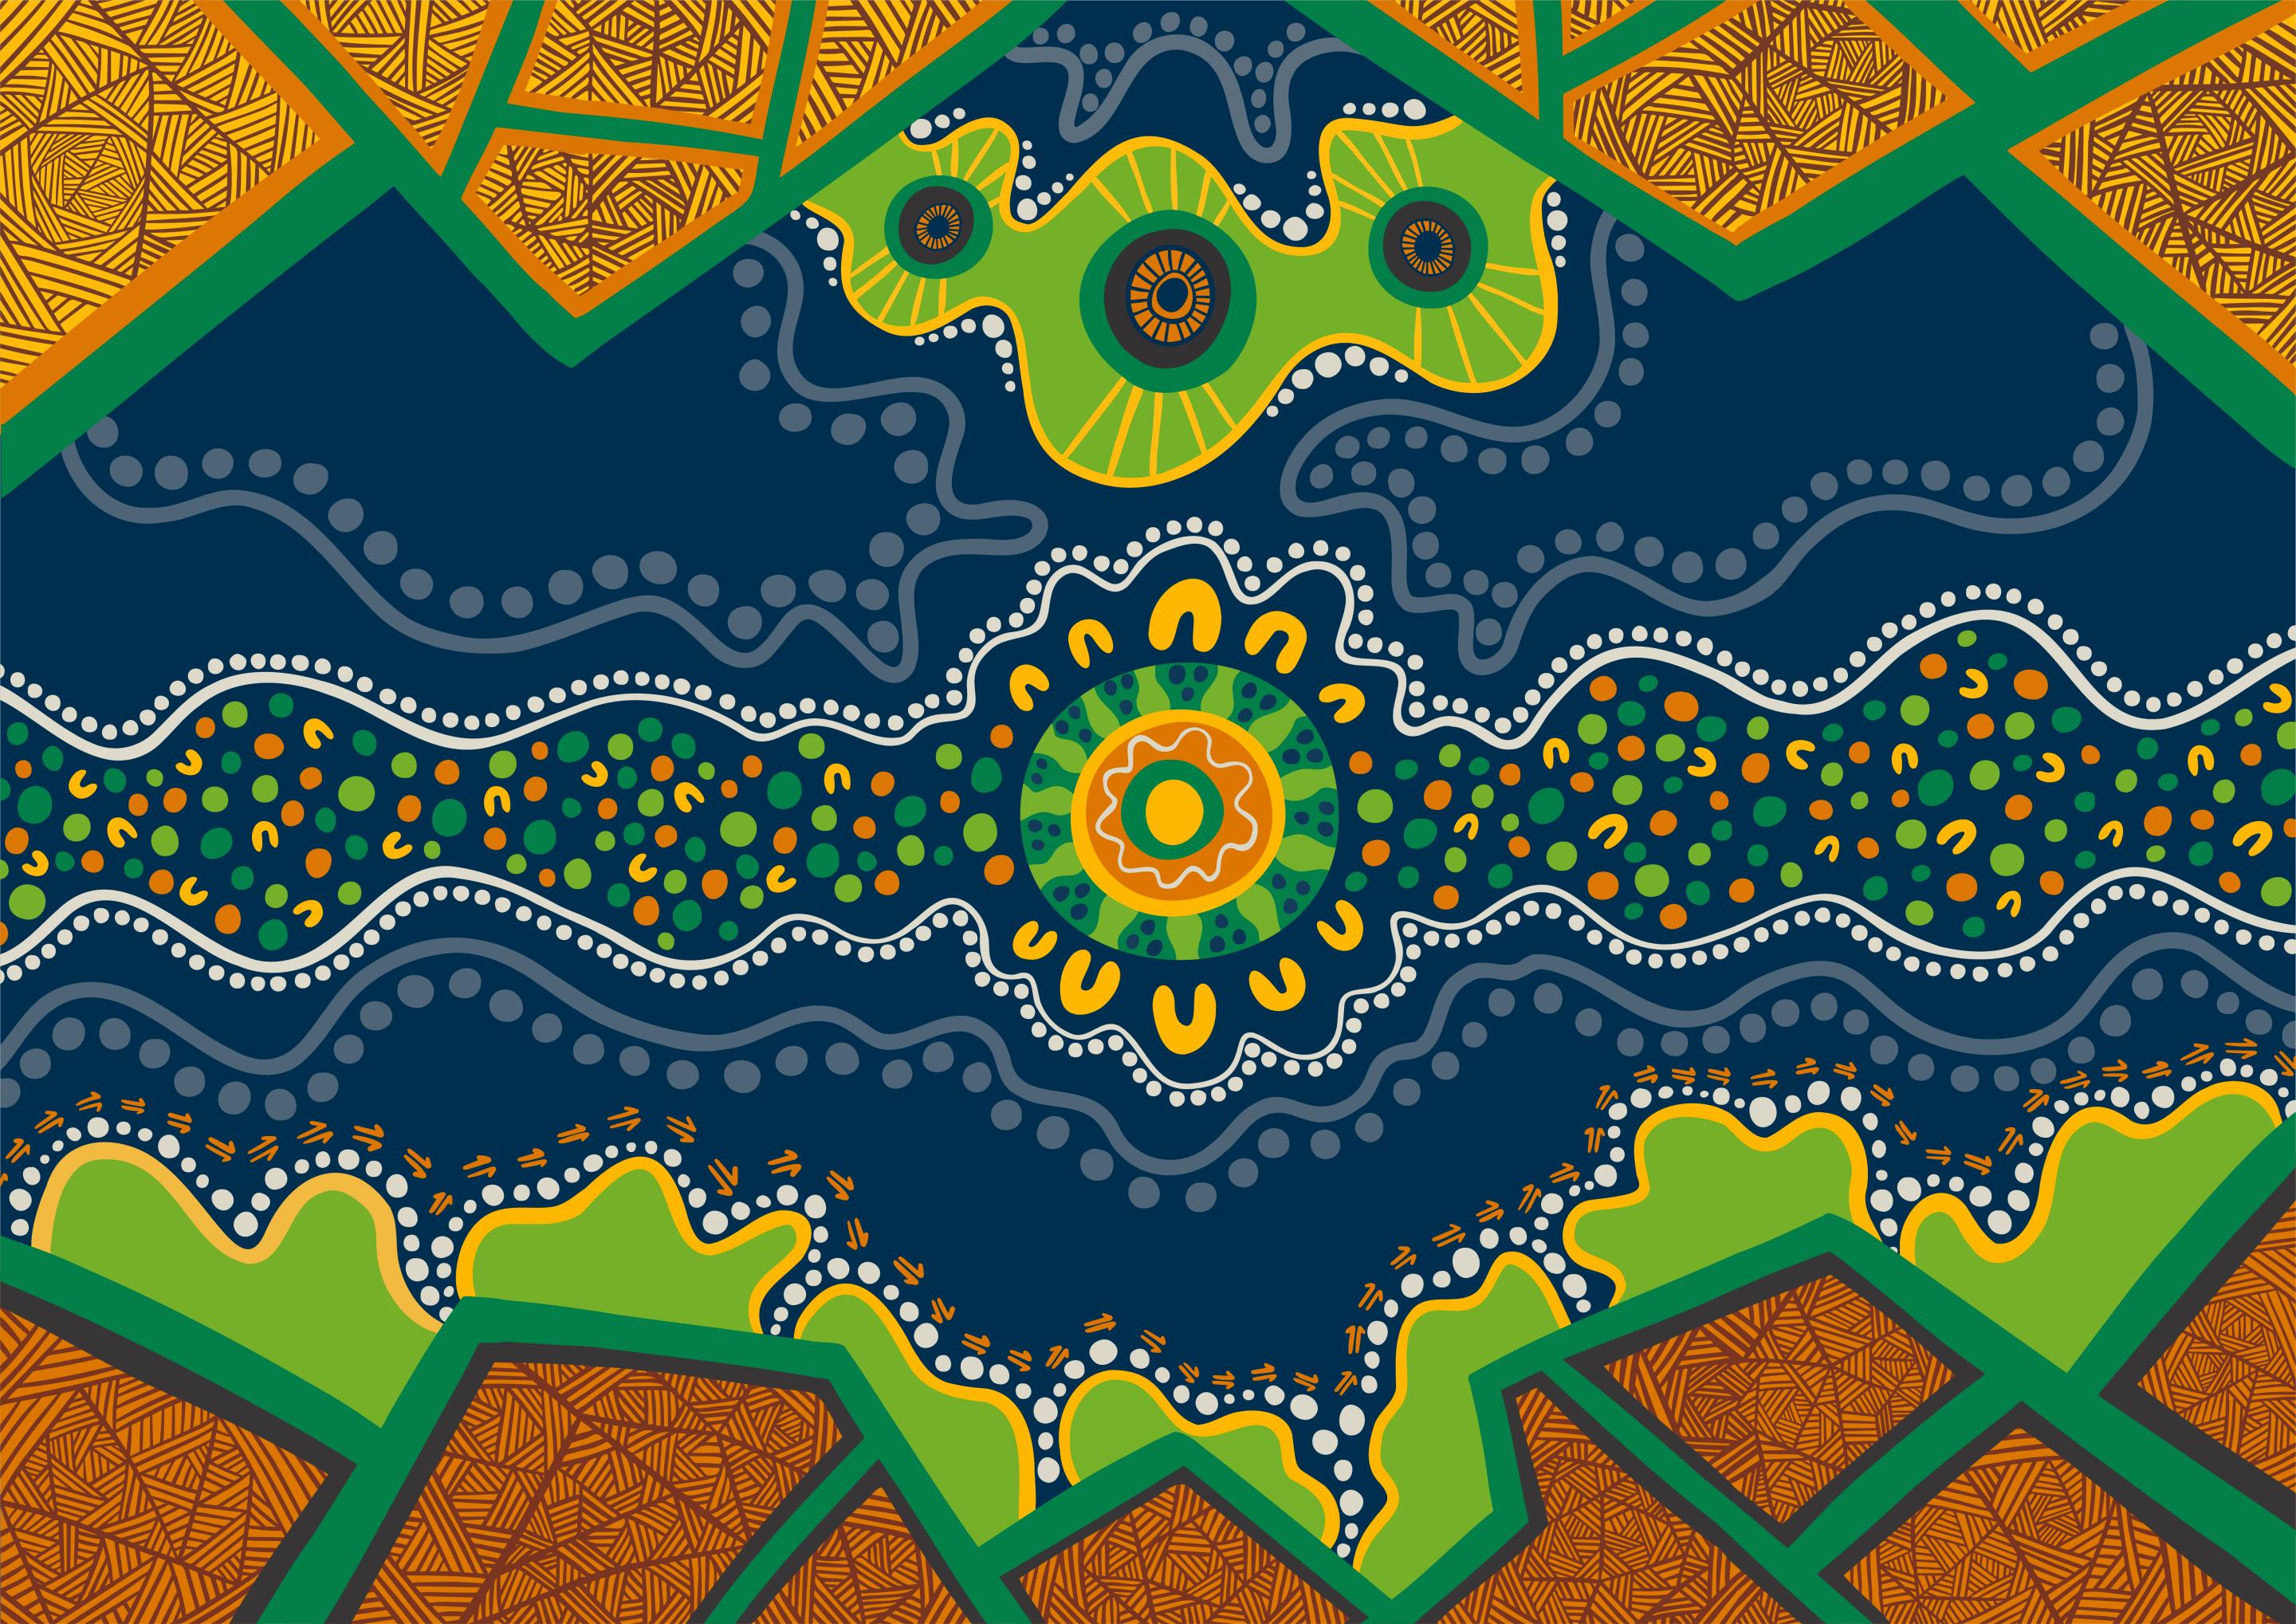 Decorative image of an Indigenous artwork